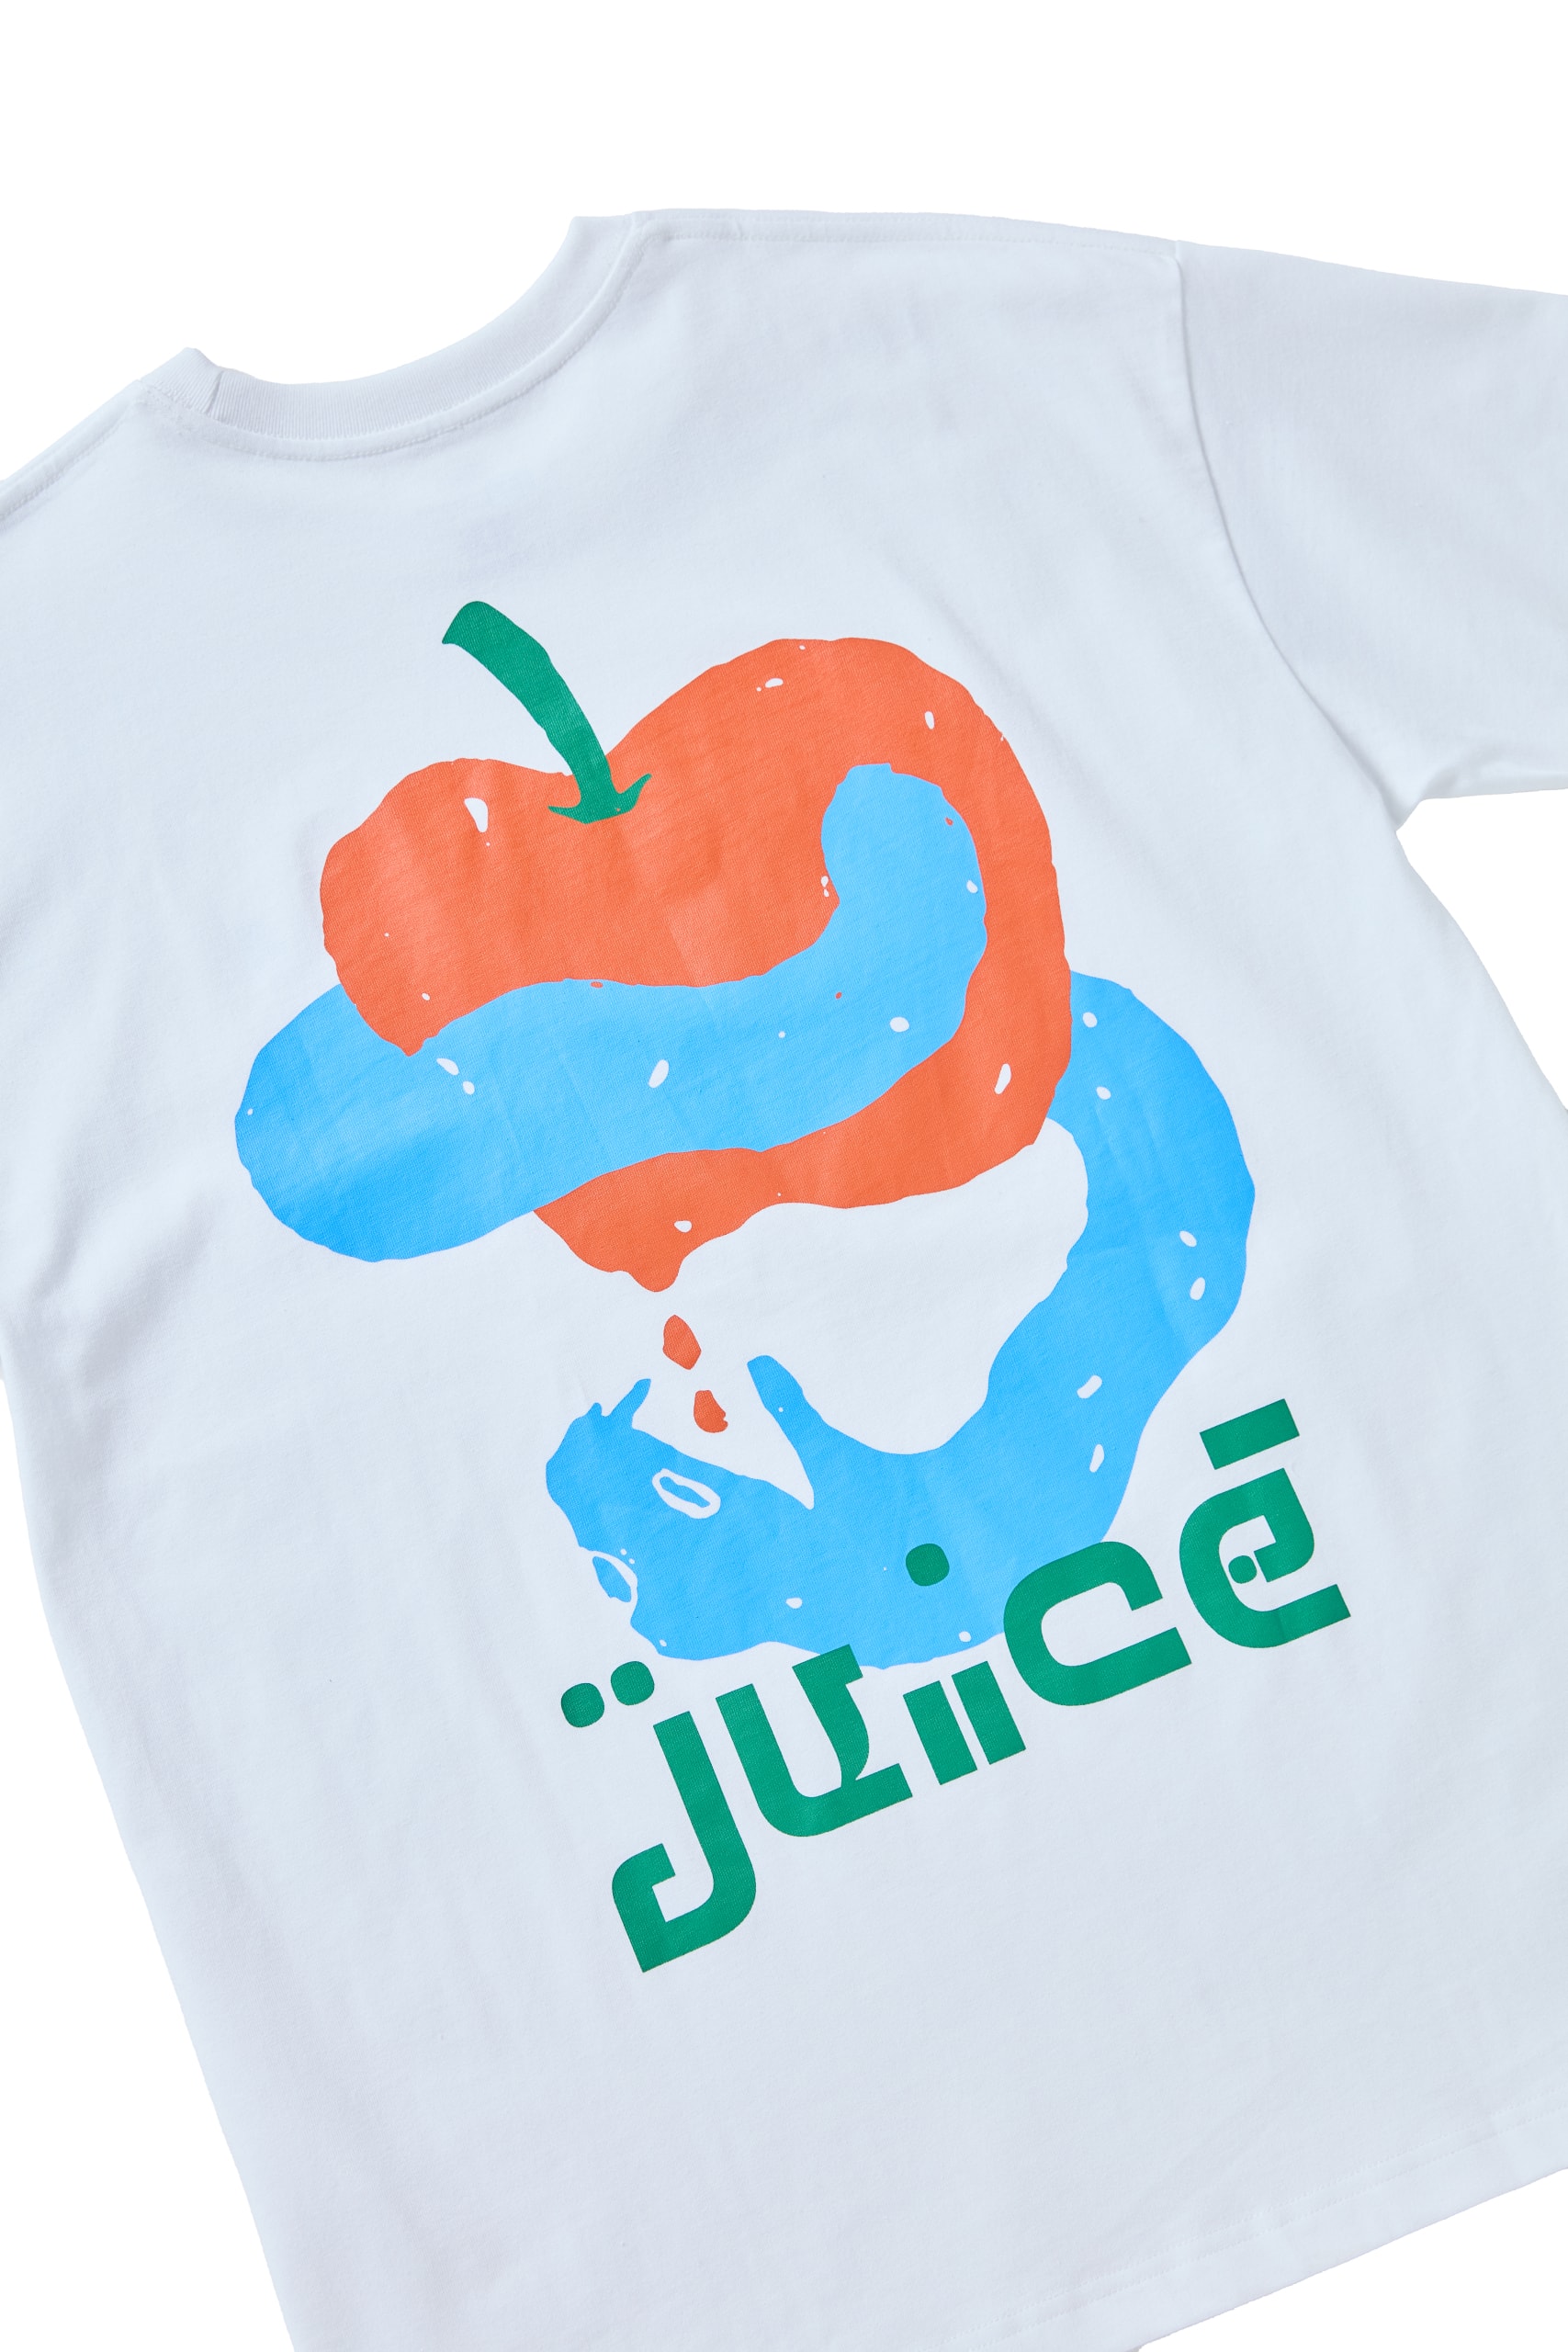 JUICE Taiwan 首款服飾系列 JUICE MERCH 正式登場